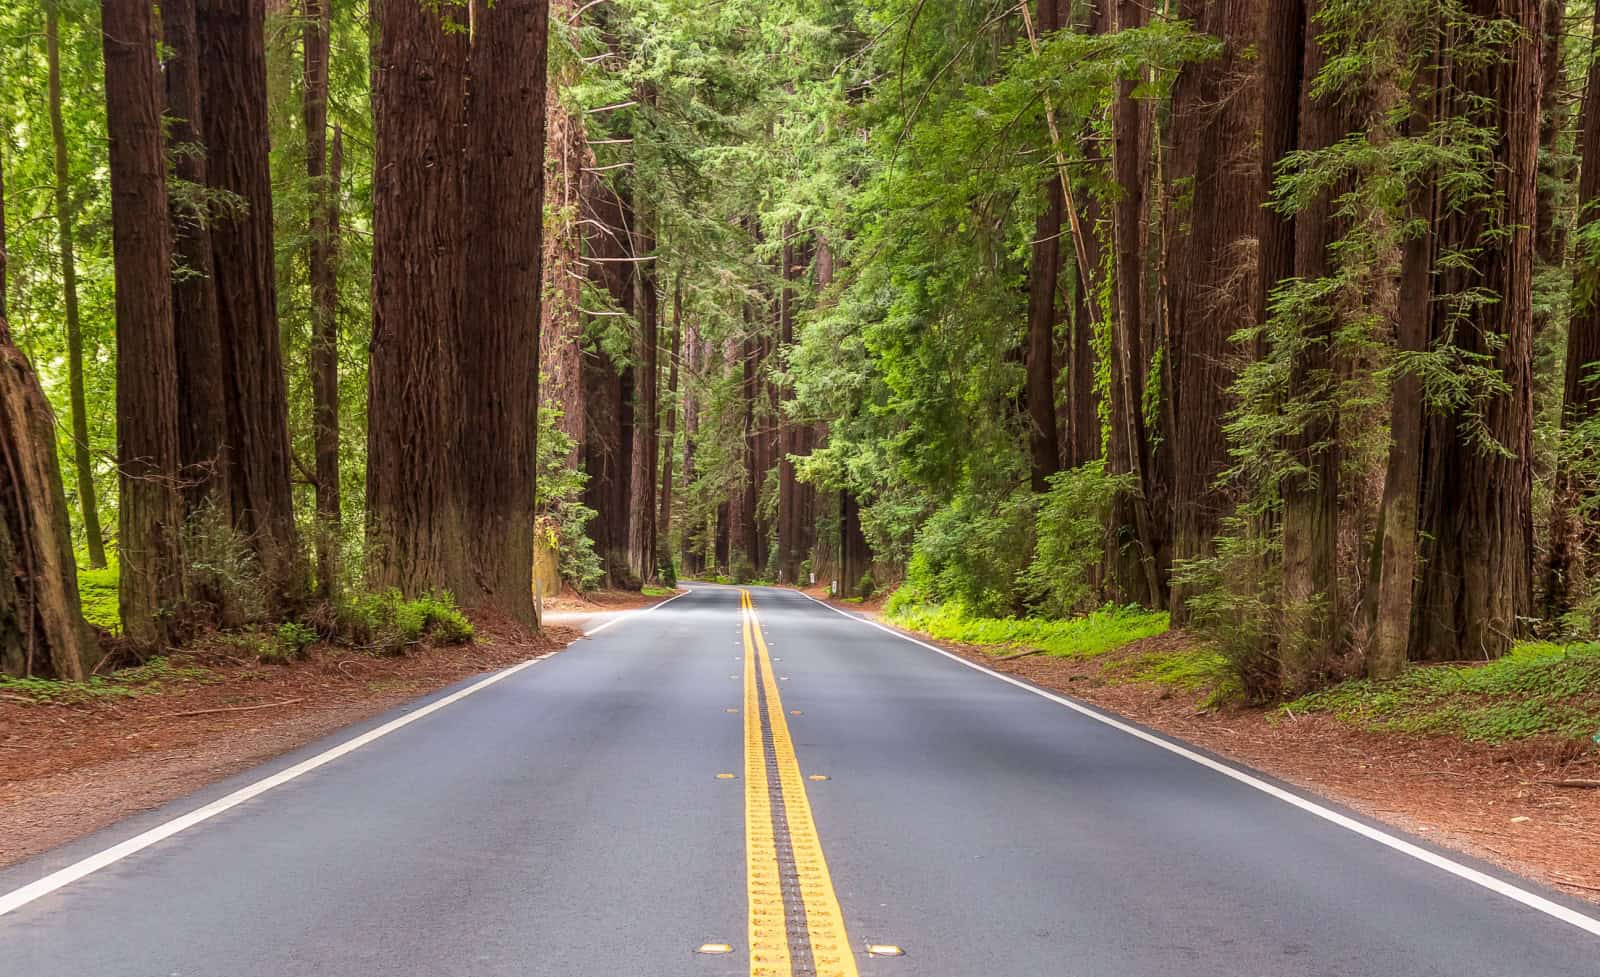 The scenic route in Navarro River Redwoods State Park, California